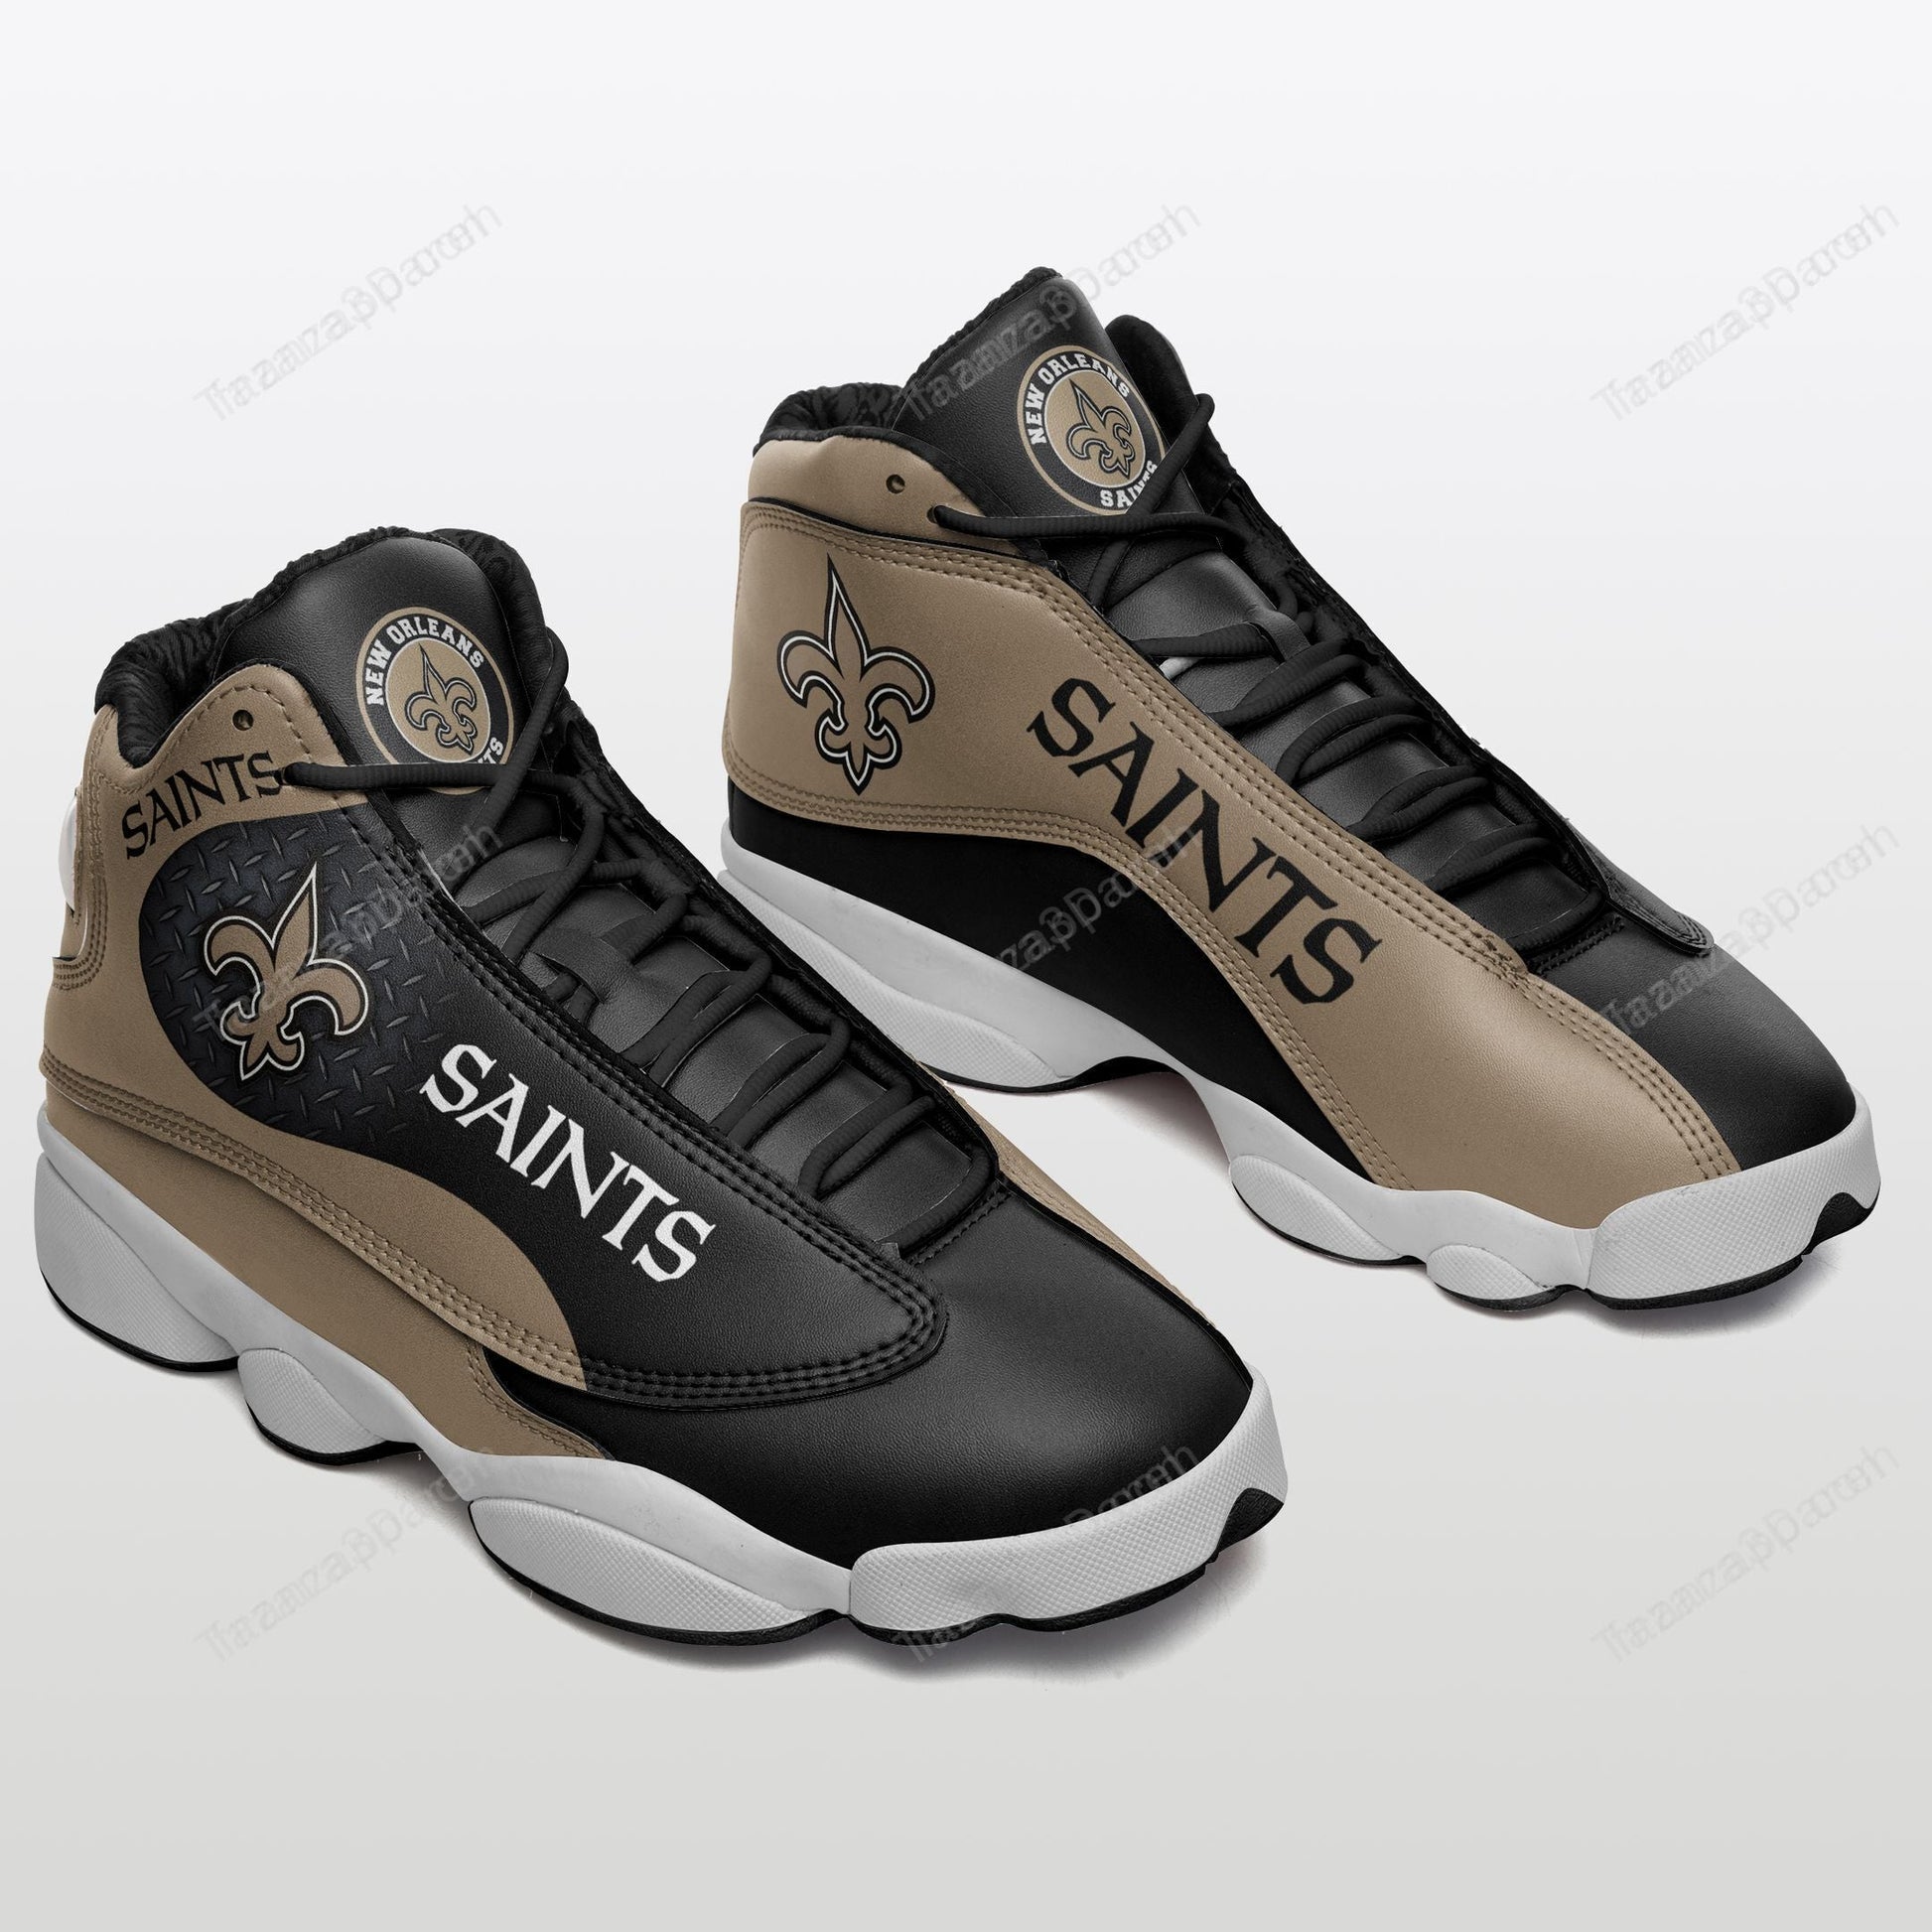 New Orleans Saints Custom Shoes Sneakers 455-Gear Wanta